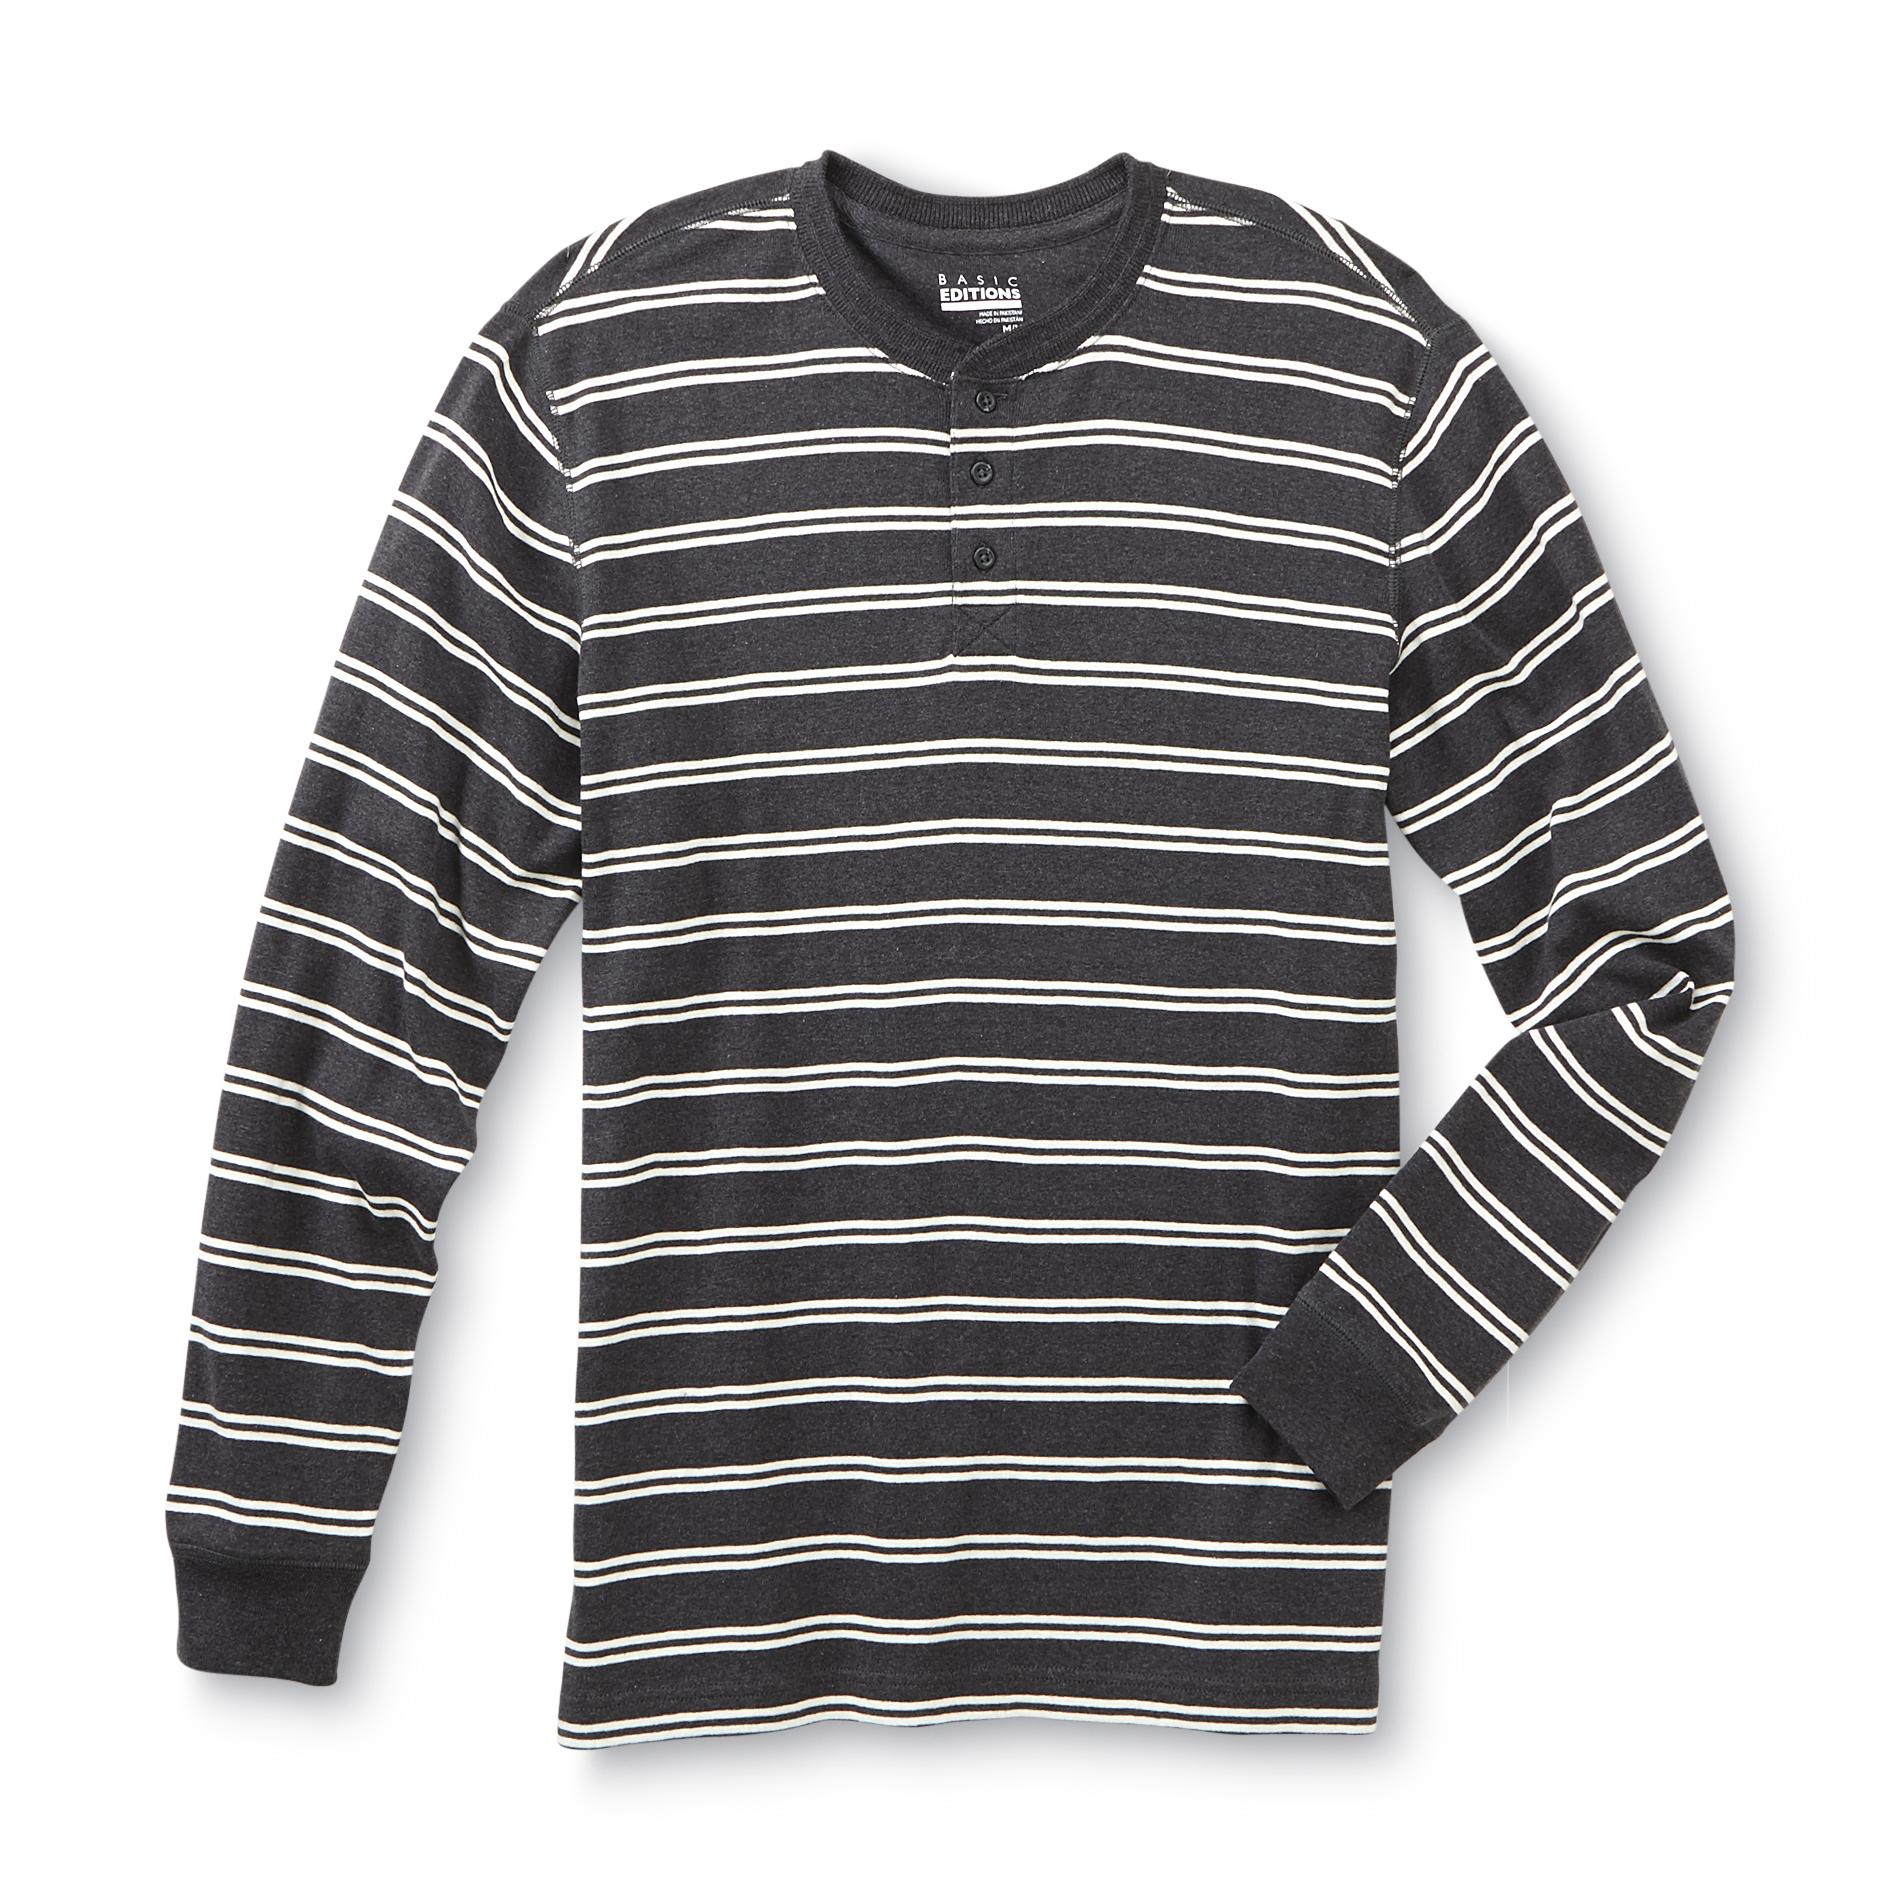 Basic Editions Men's Henley Shirt - Striped